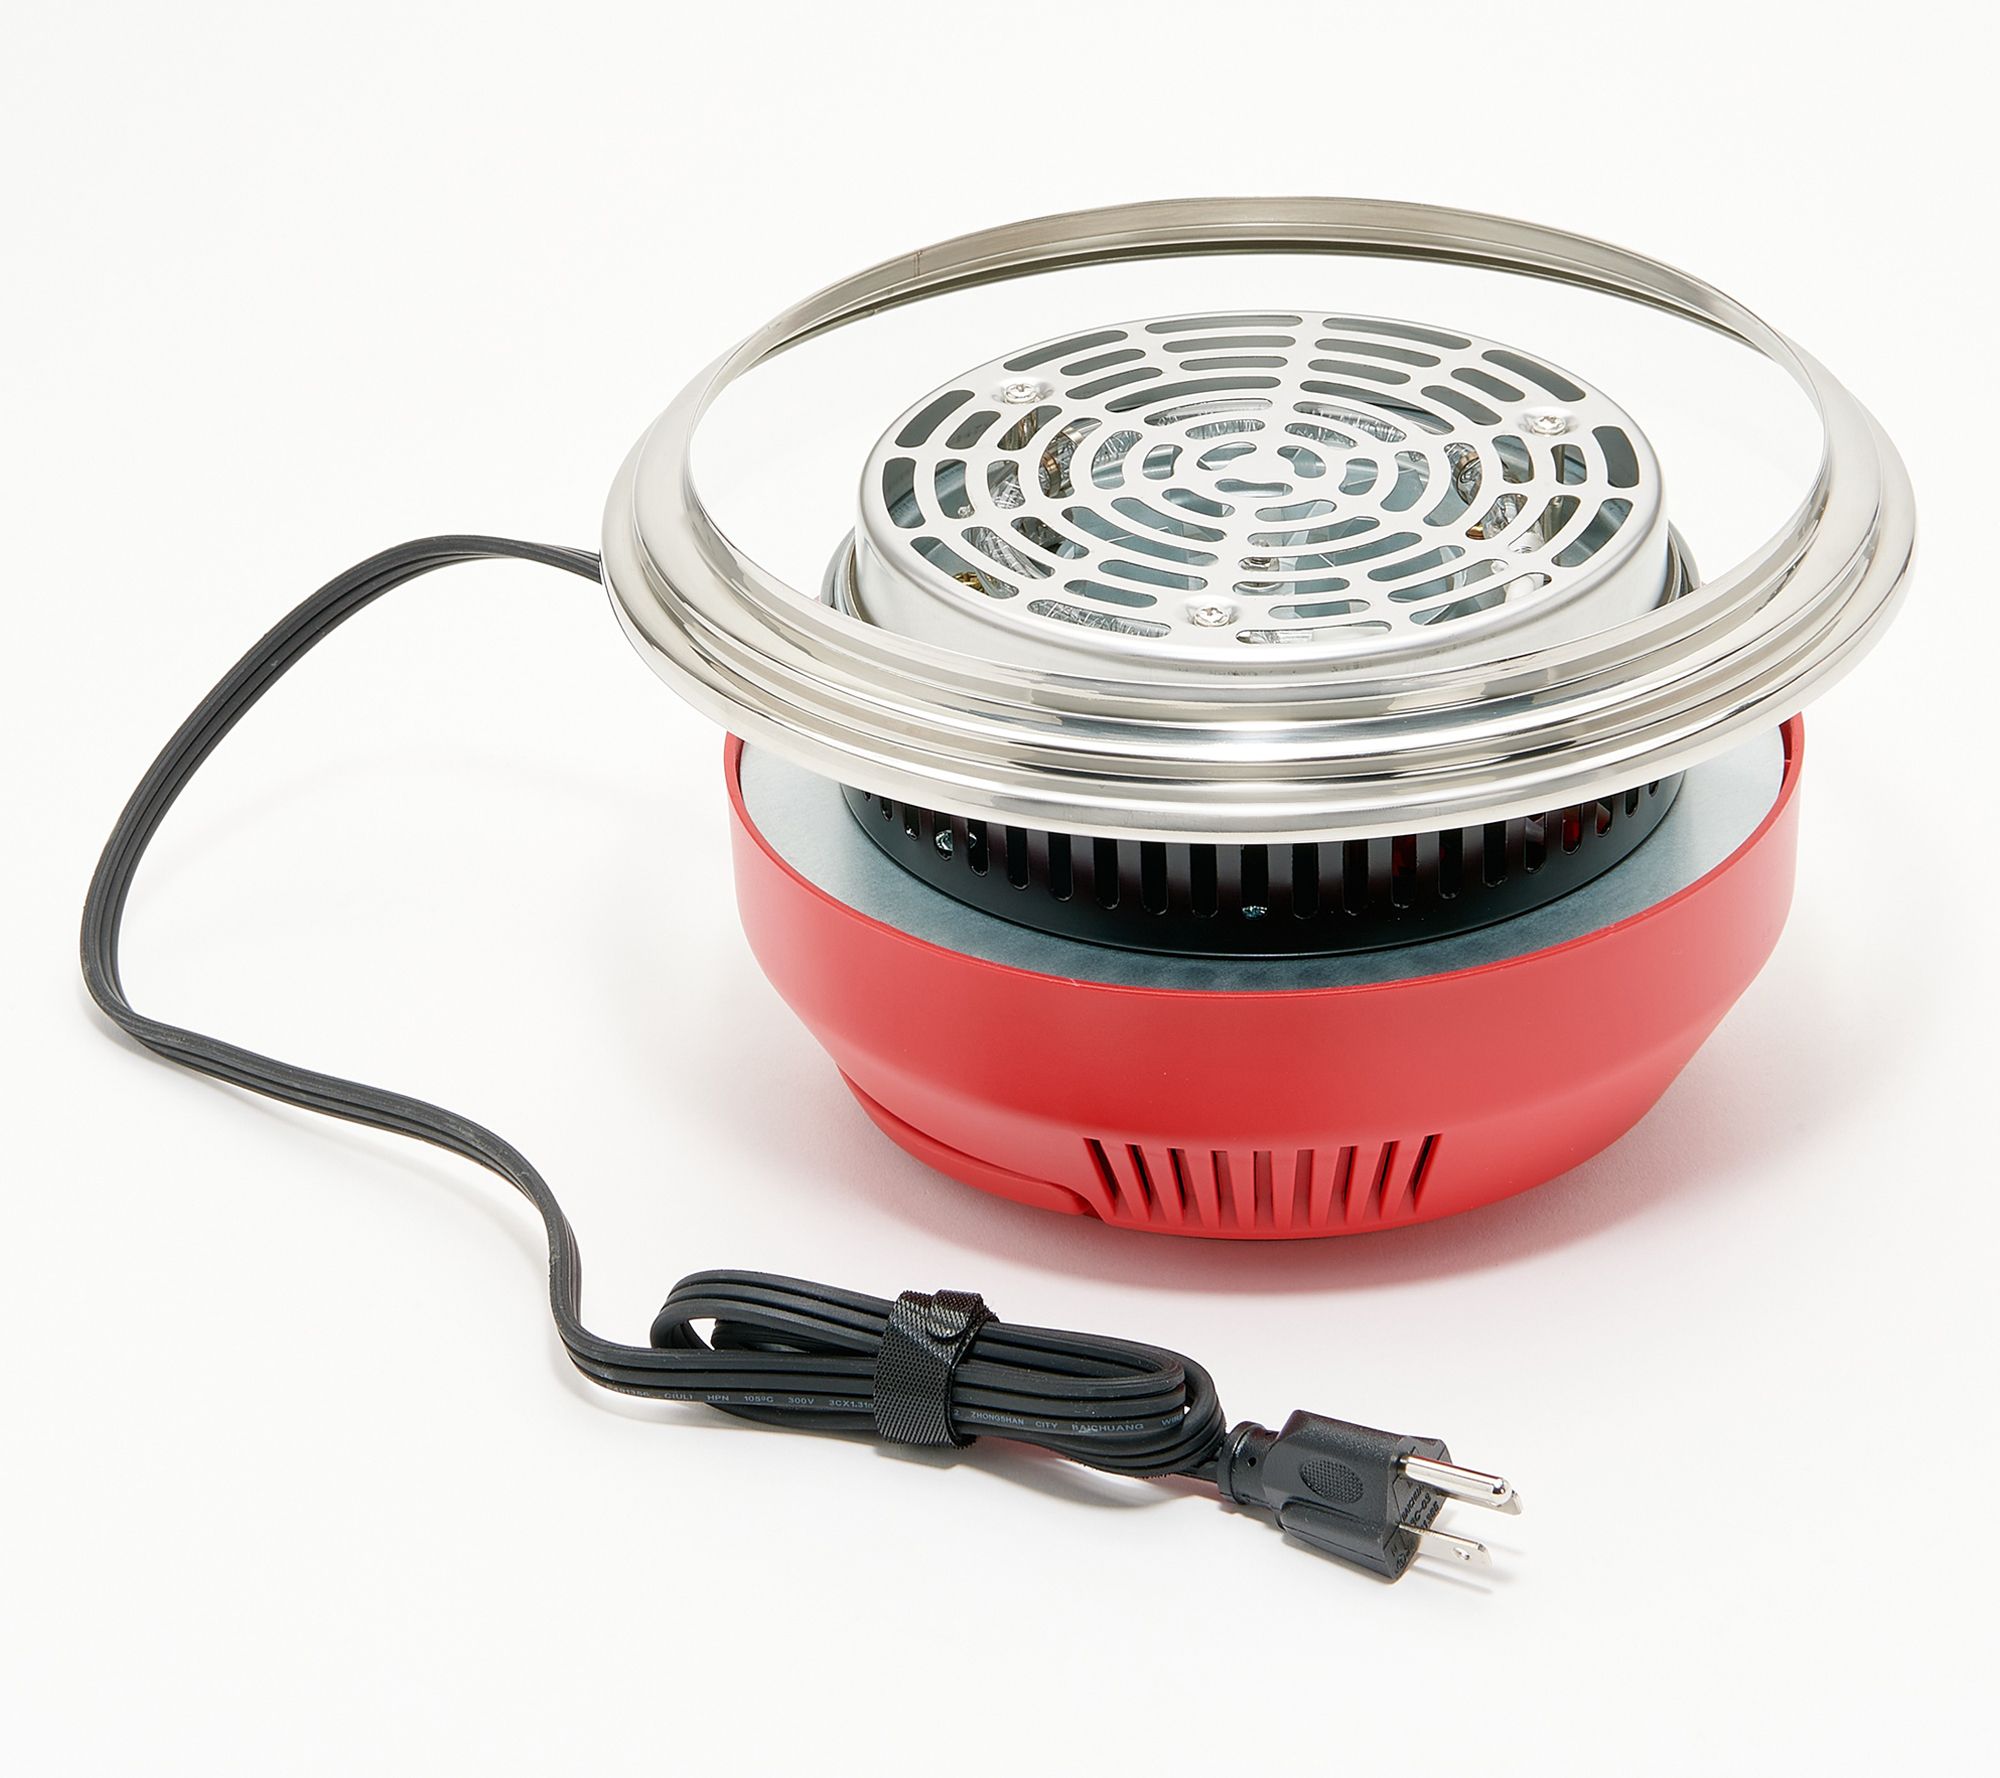 Universal Air Fryer Lid - Turn a Pot, Pan, or Pressure Cooker Into an Air  Fryer